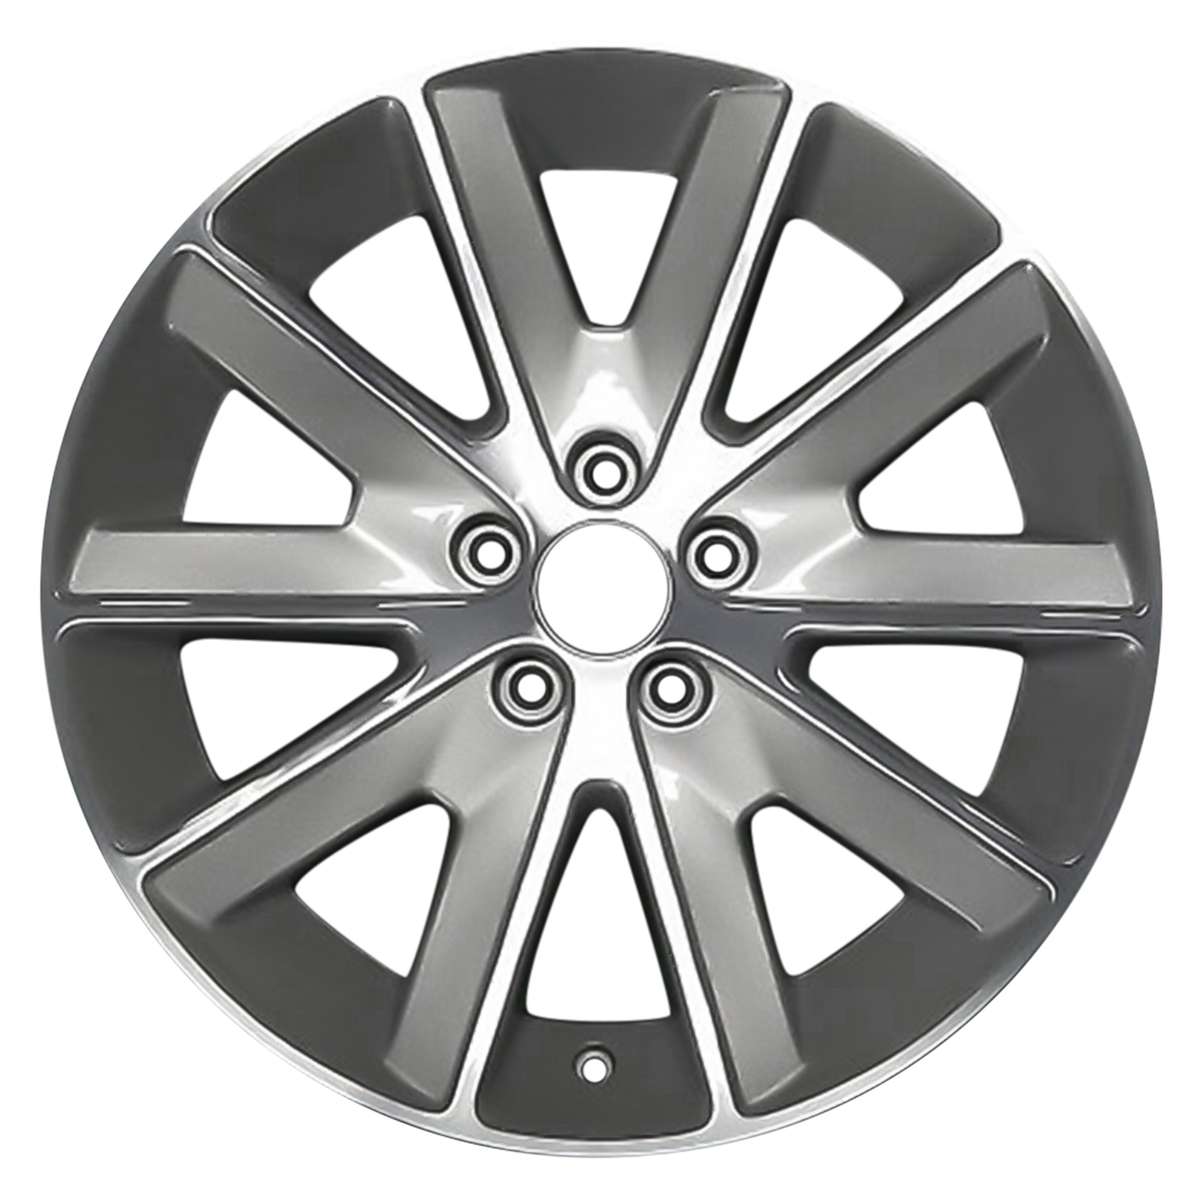 2015 Lincoln MKT 18" OEM Wheel Rim W10155H